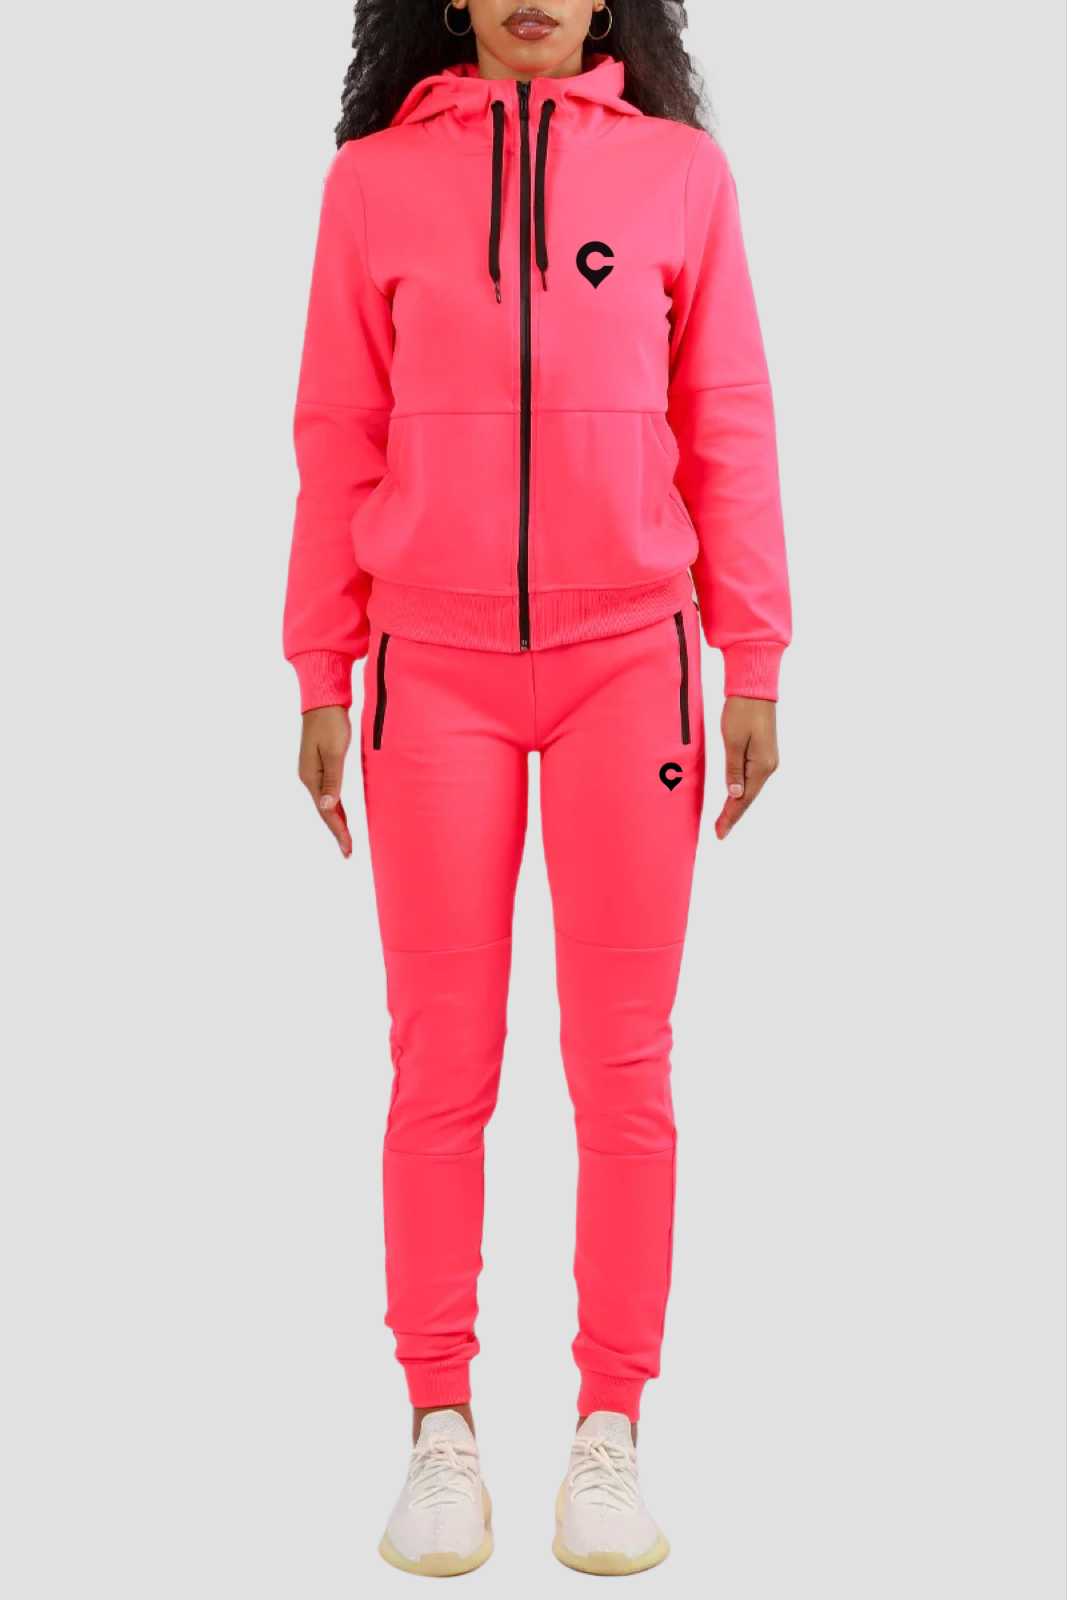 Woman's Tech Suit (Neon Pink)